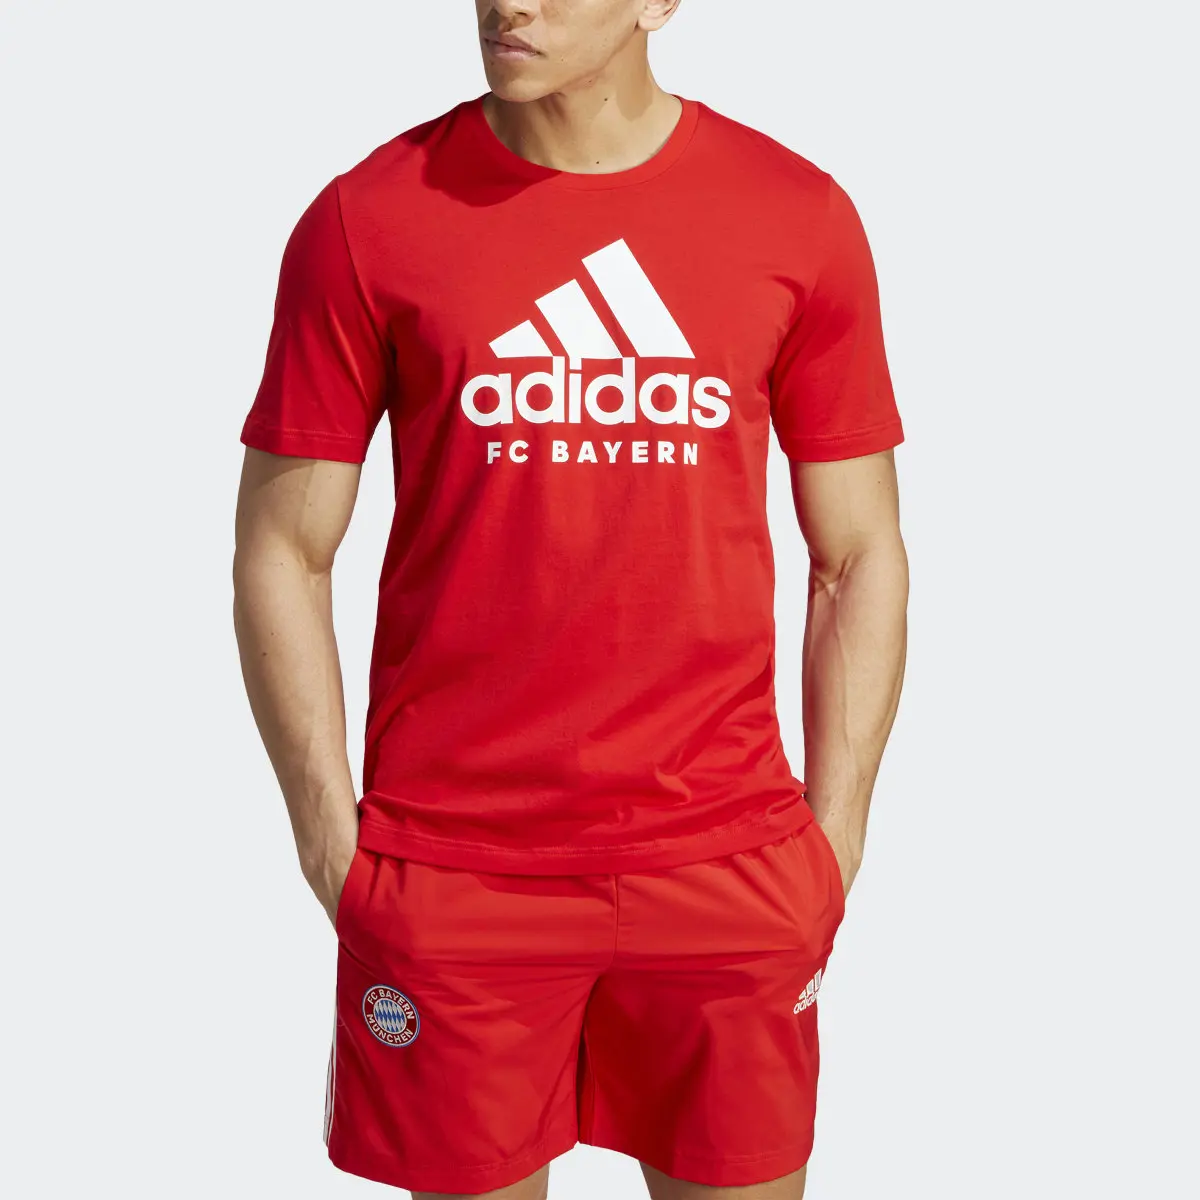 Adidas FC Bayern München DNA Graphic T-Shirt. 1